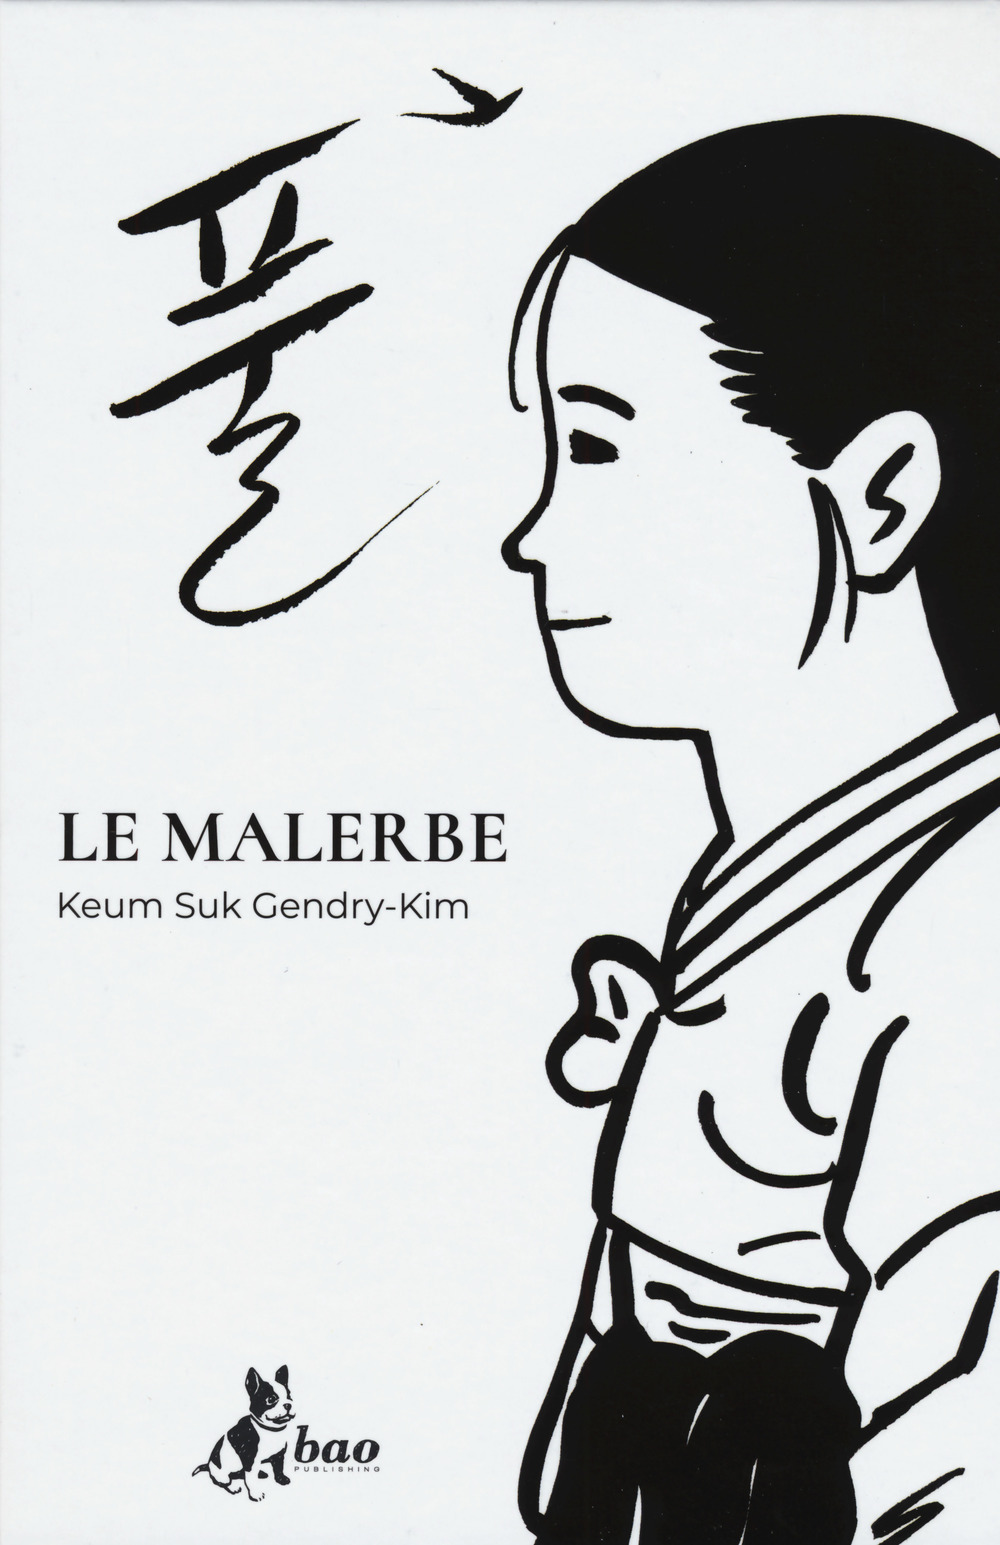 Gendry-Kim Keum Suk - Le Malerbe